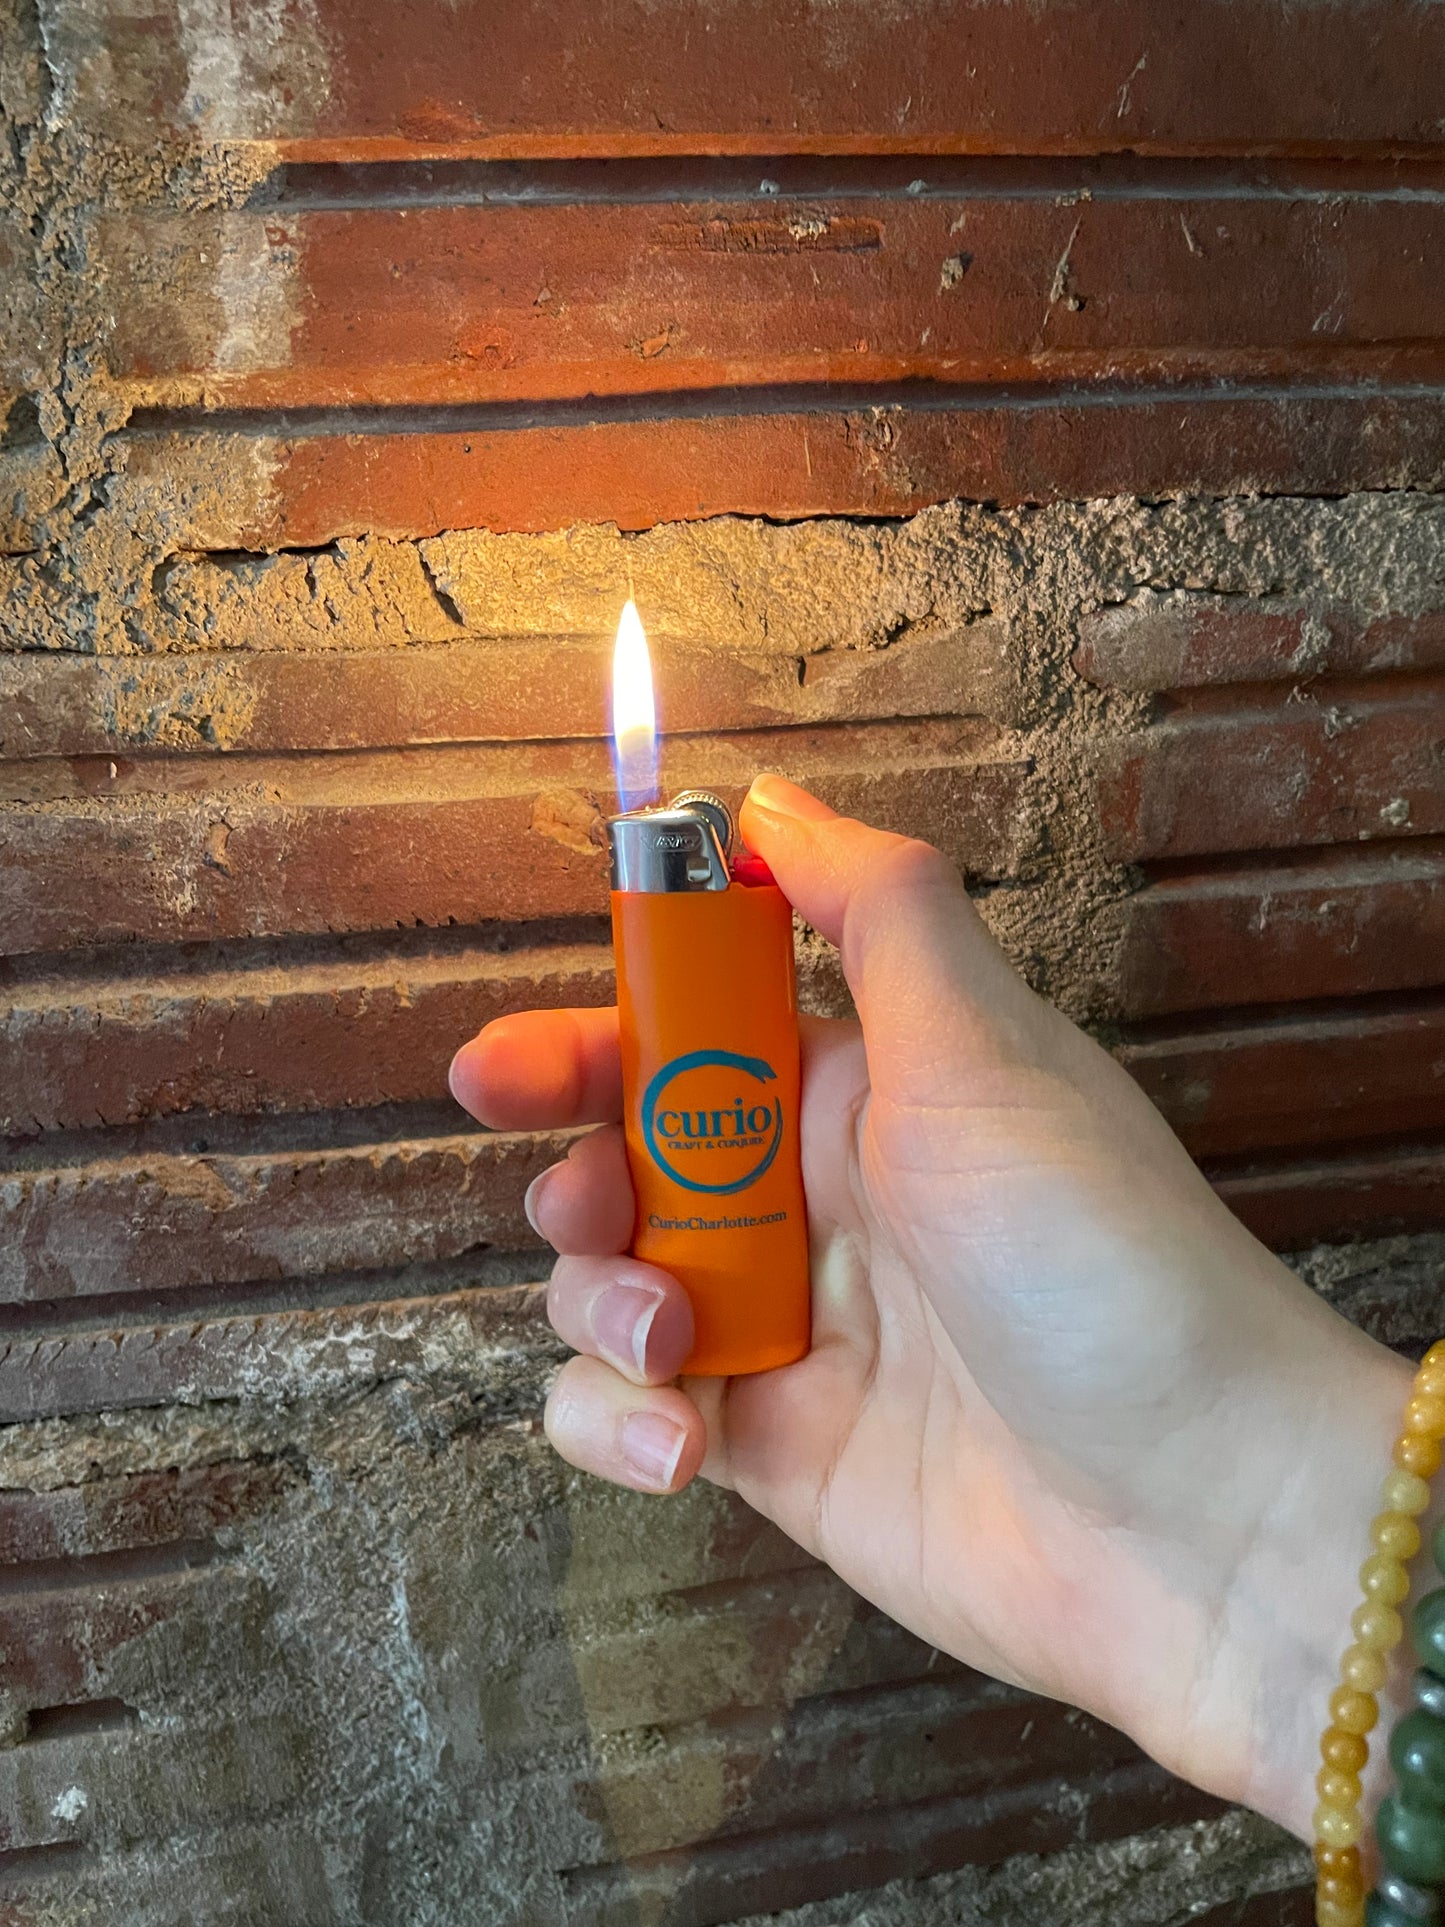 Curio Lighters